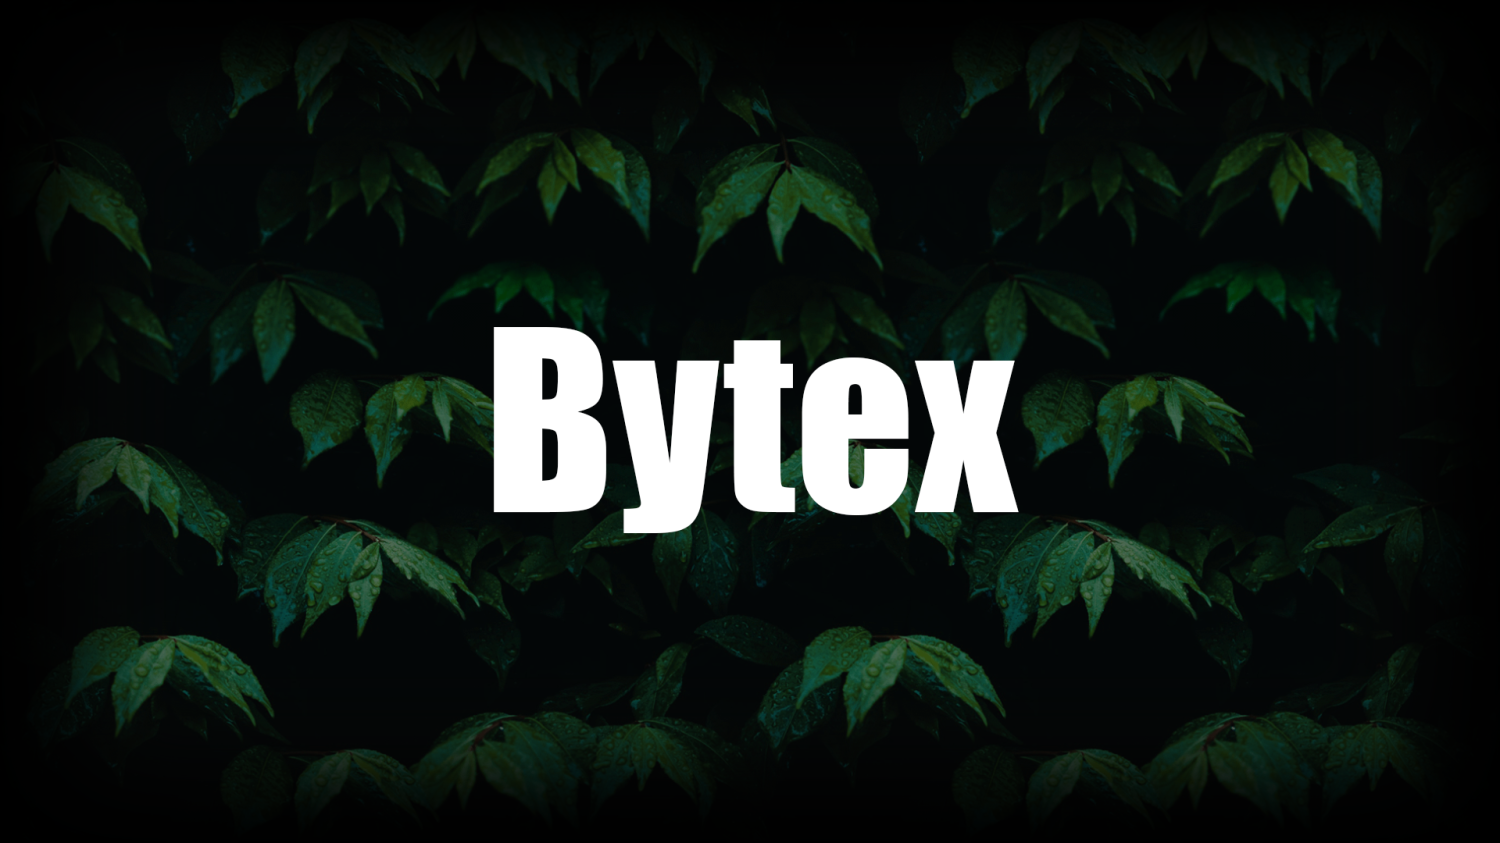 Bytex Unturned #2 FULL GLOBAL